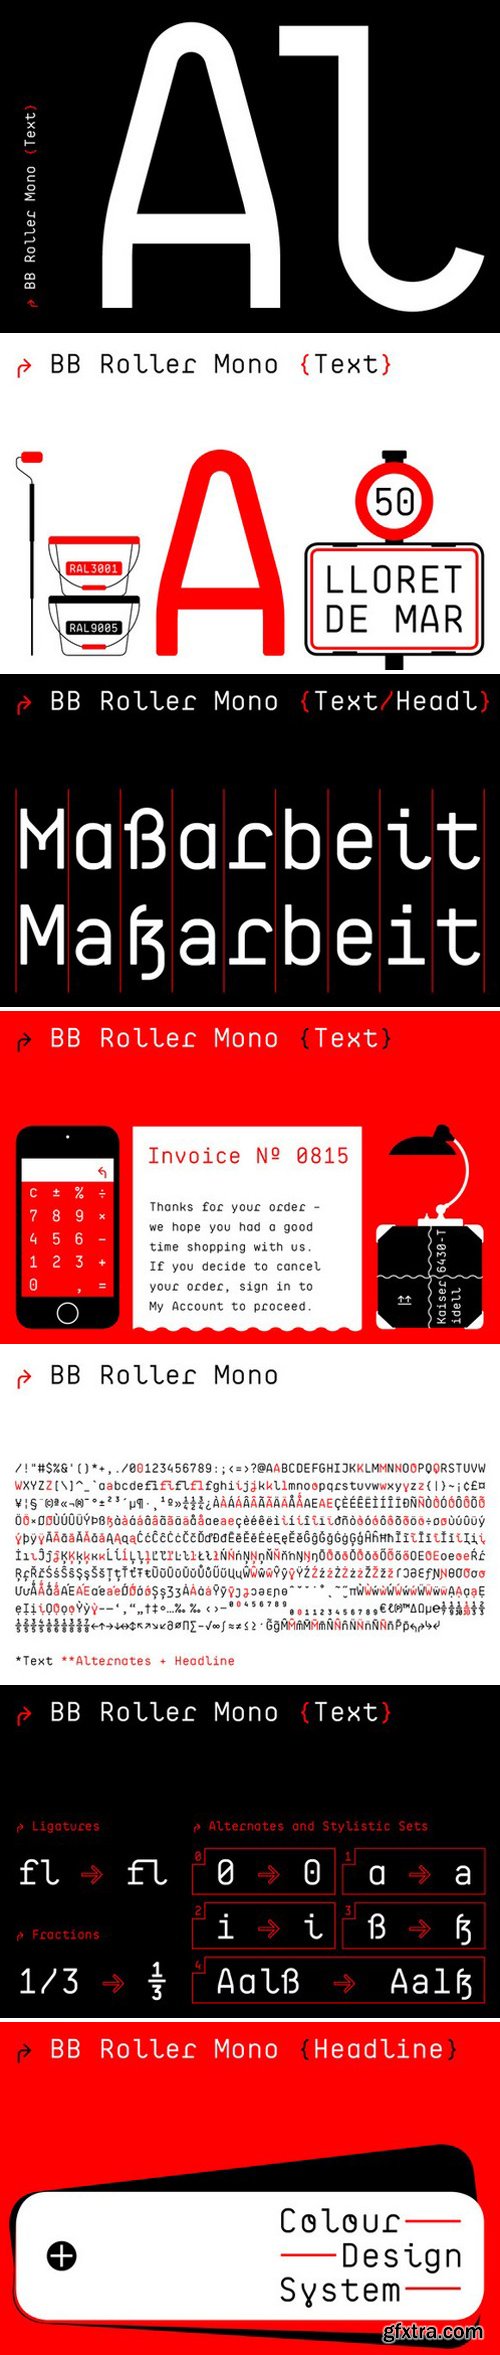 CM - BB Roller Mono Text 363993